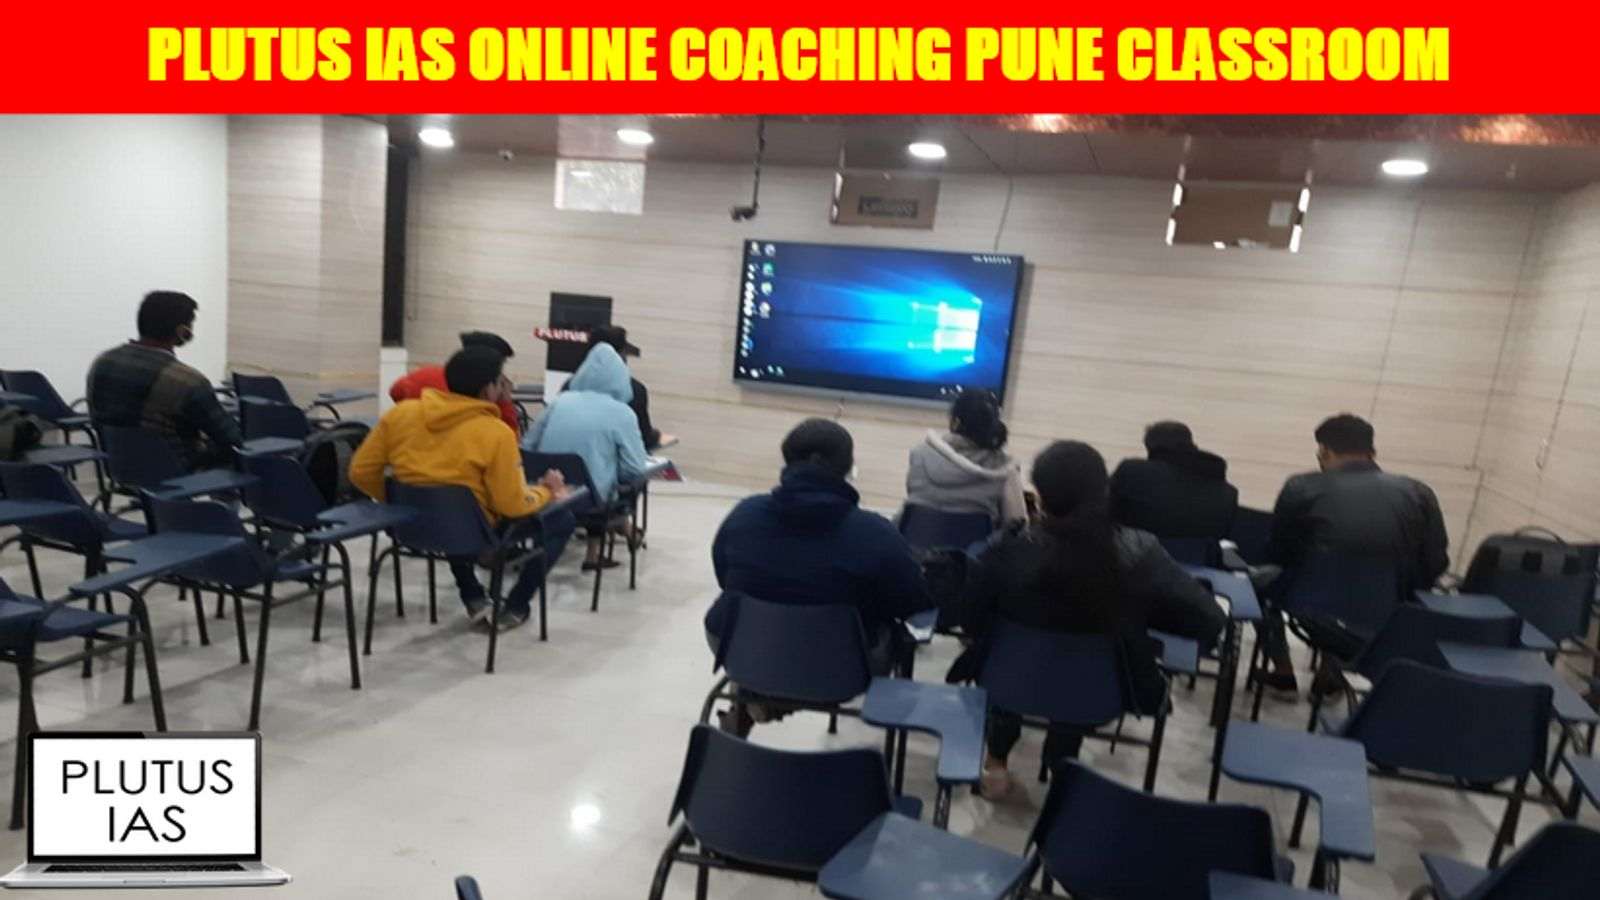 Plutus IAS Online Coaching Pune Class Room